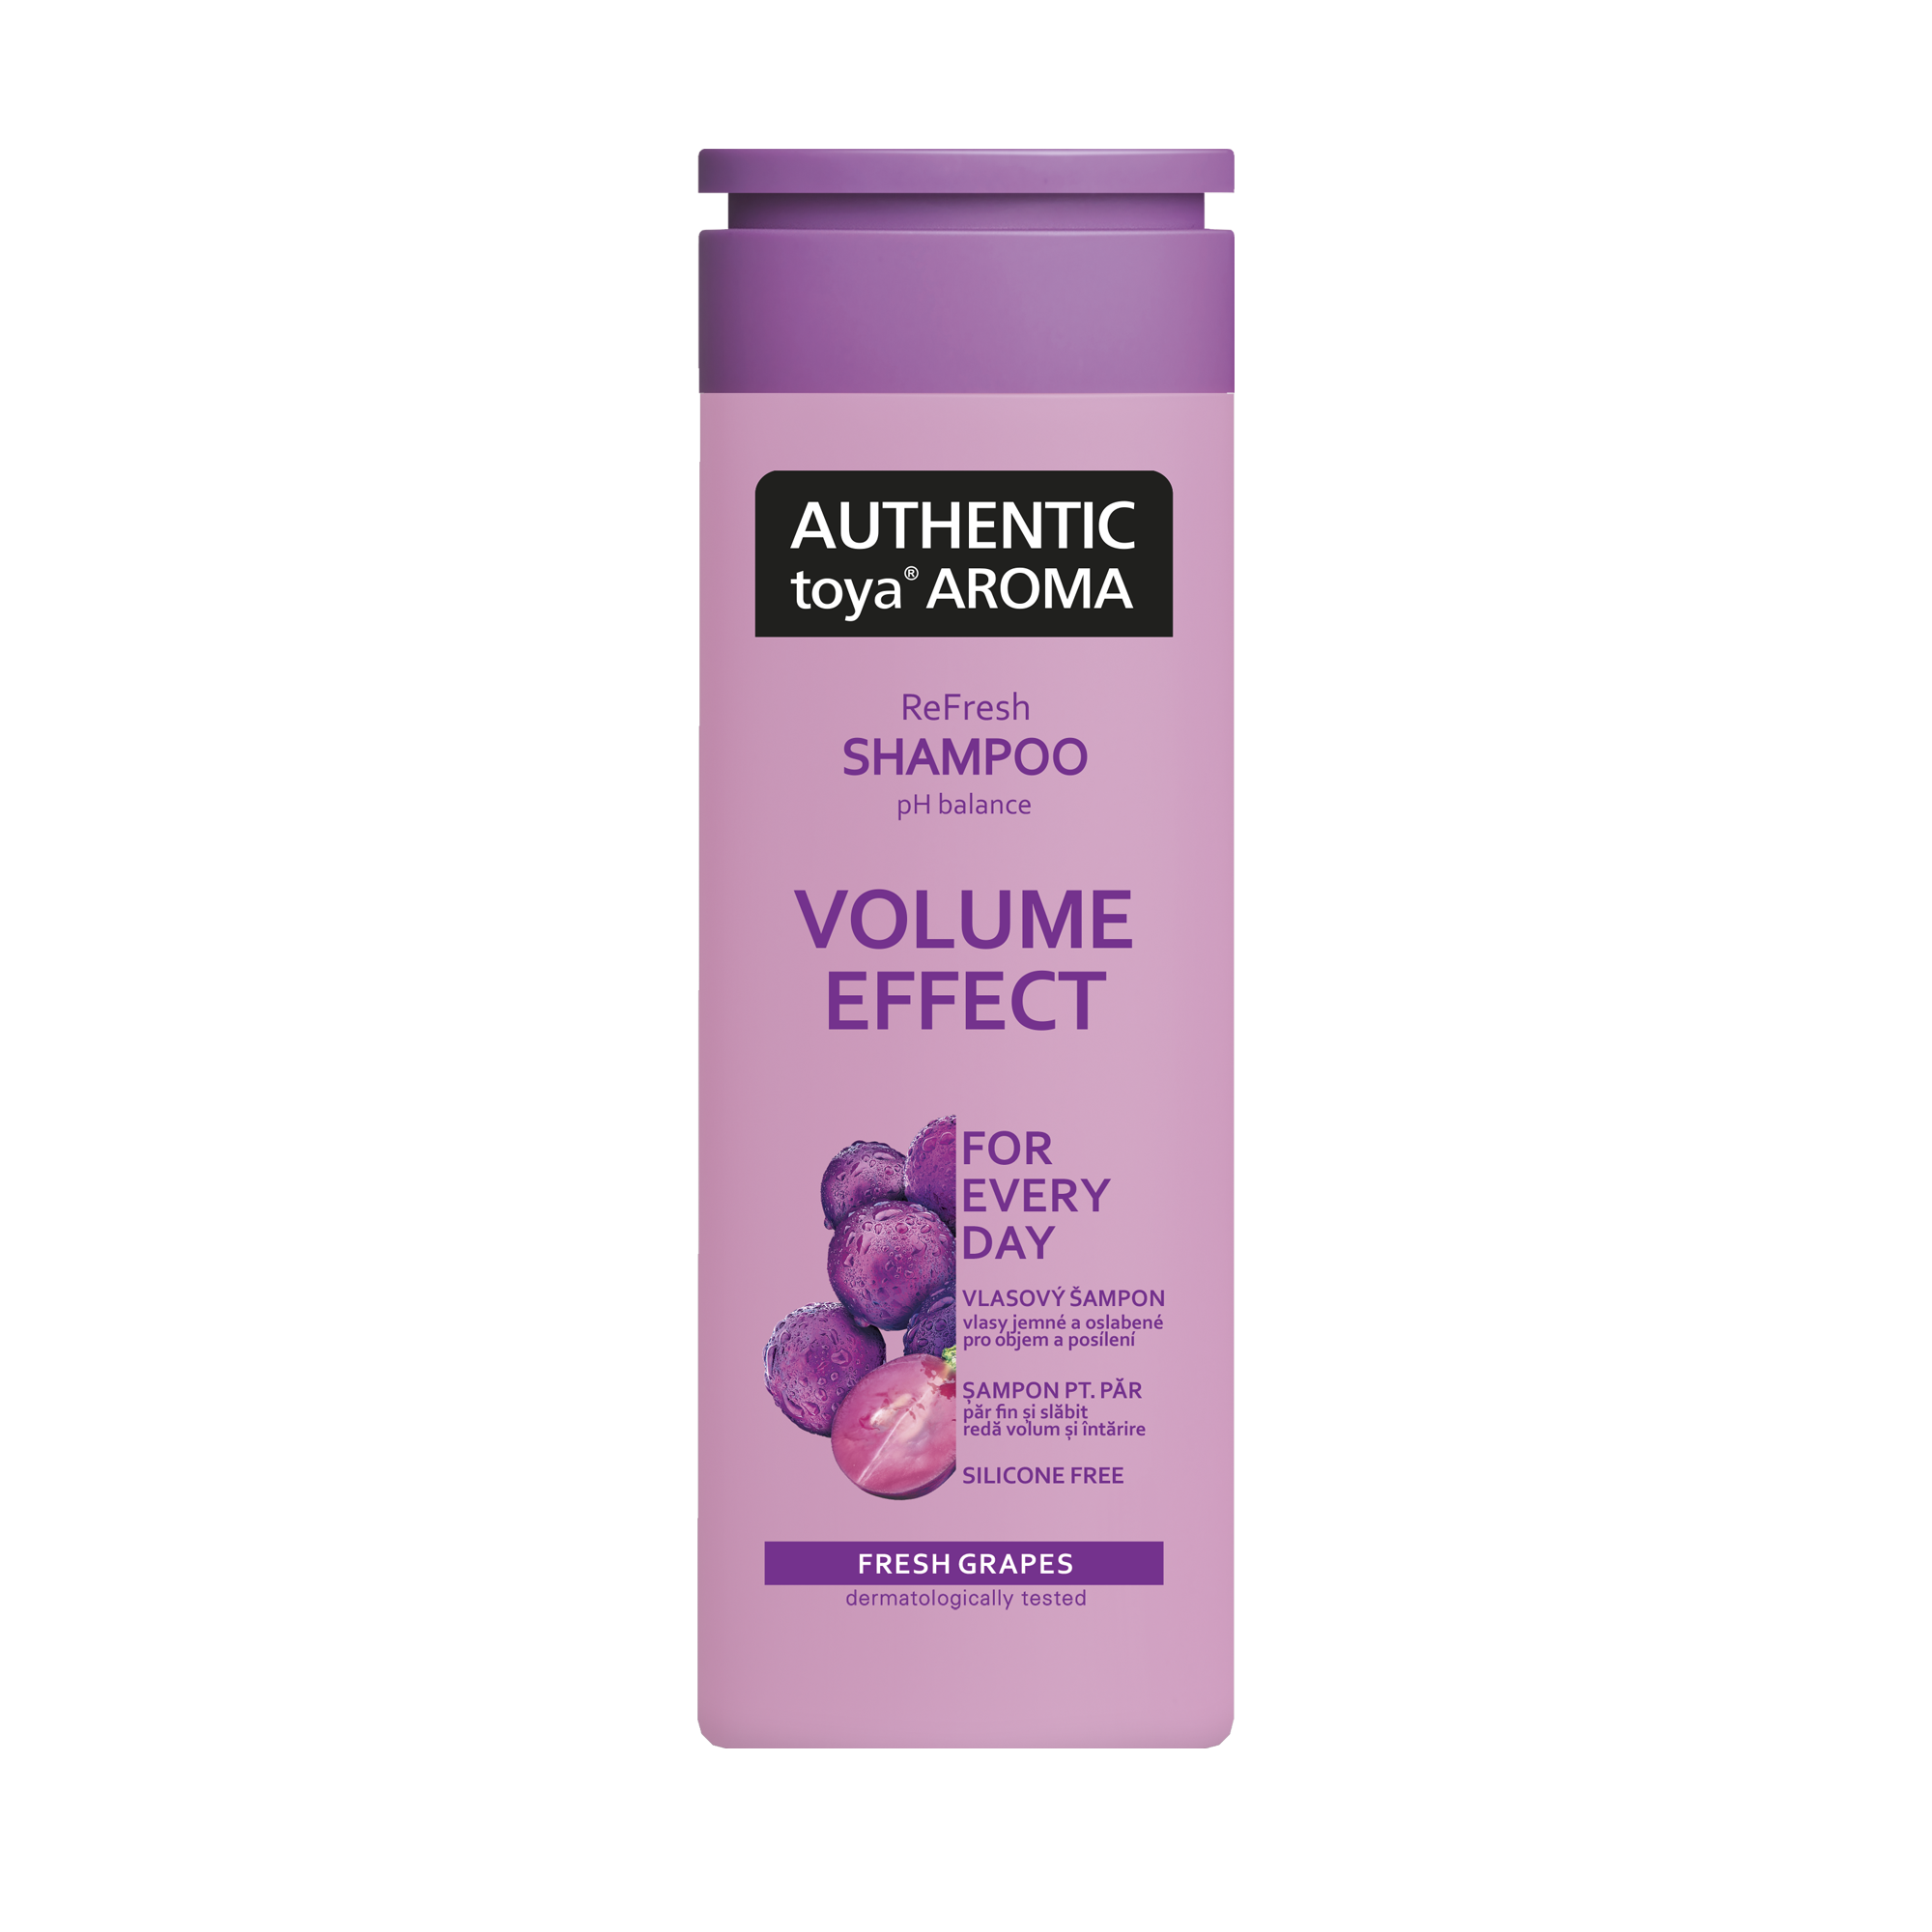 AUTHENTIC toya AROMA șampon de păr Volume Effect